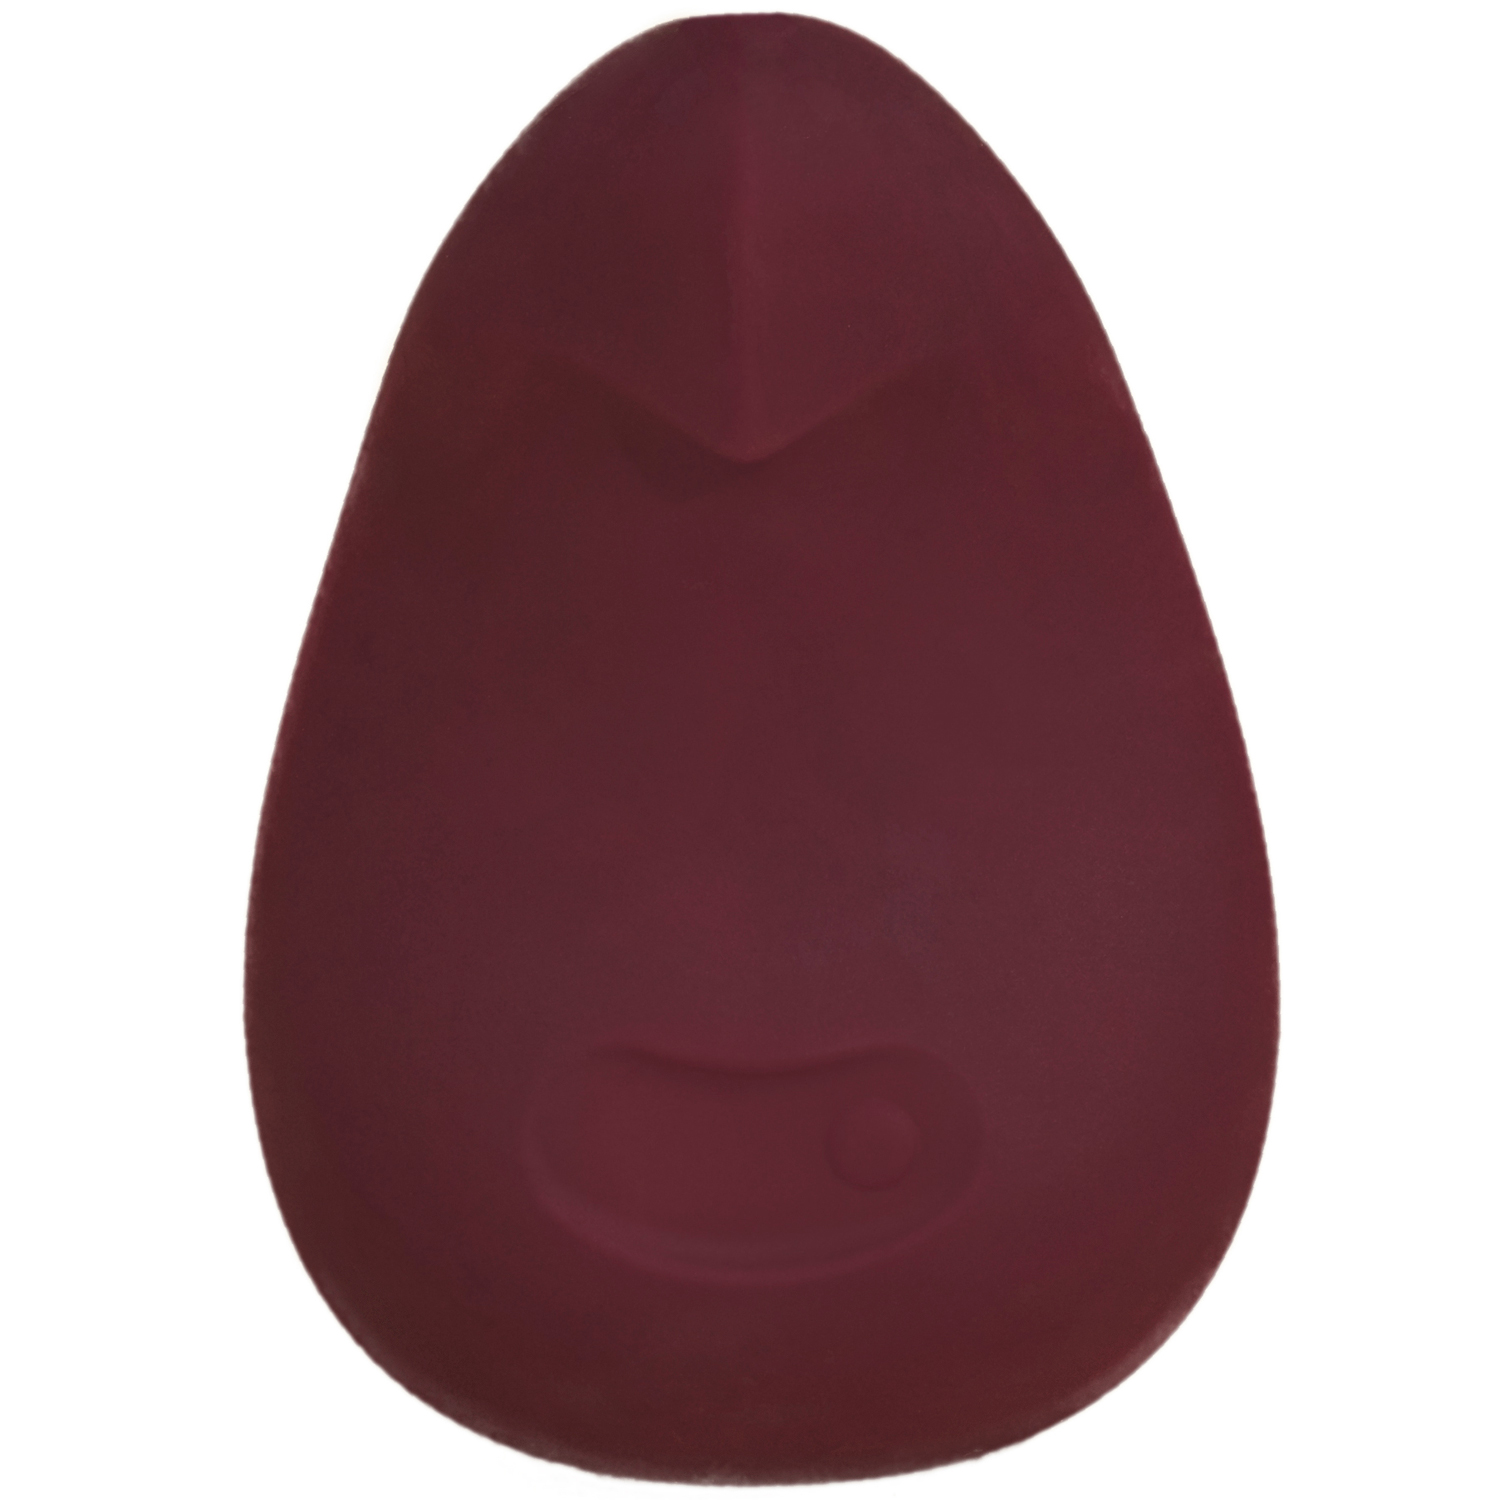 Dame Products POM Fleksibel Klitoris Vibrator - Bordeaux